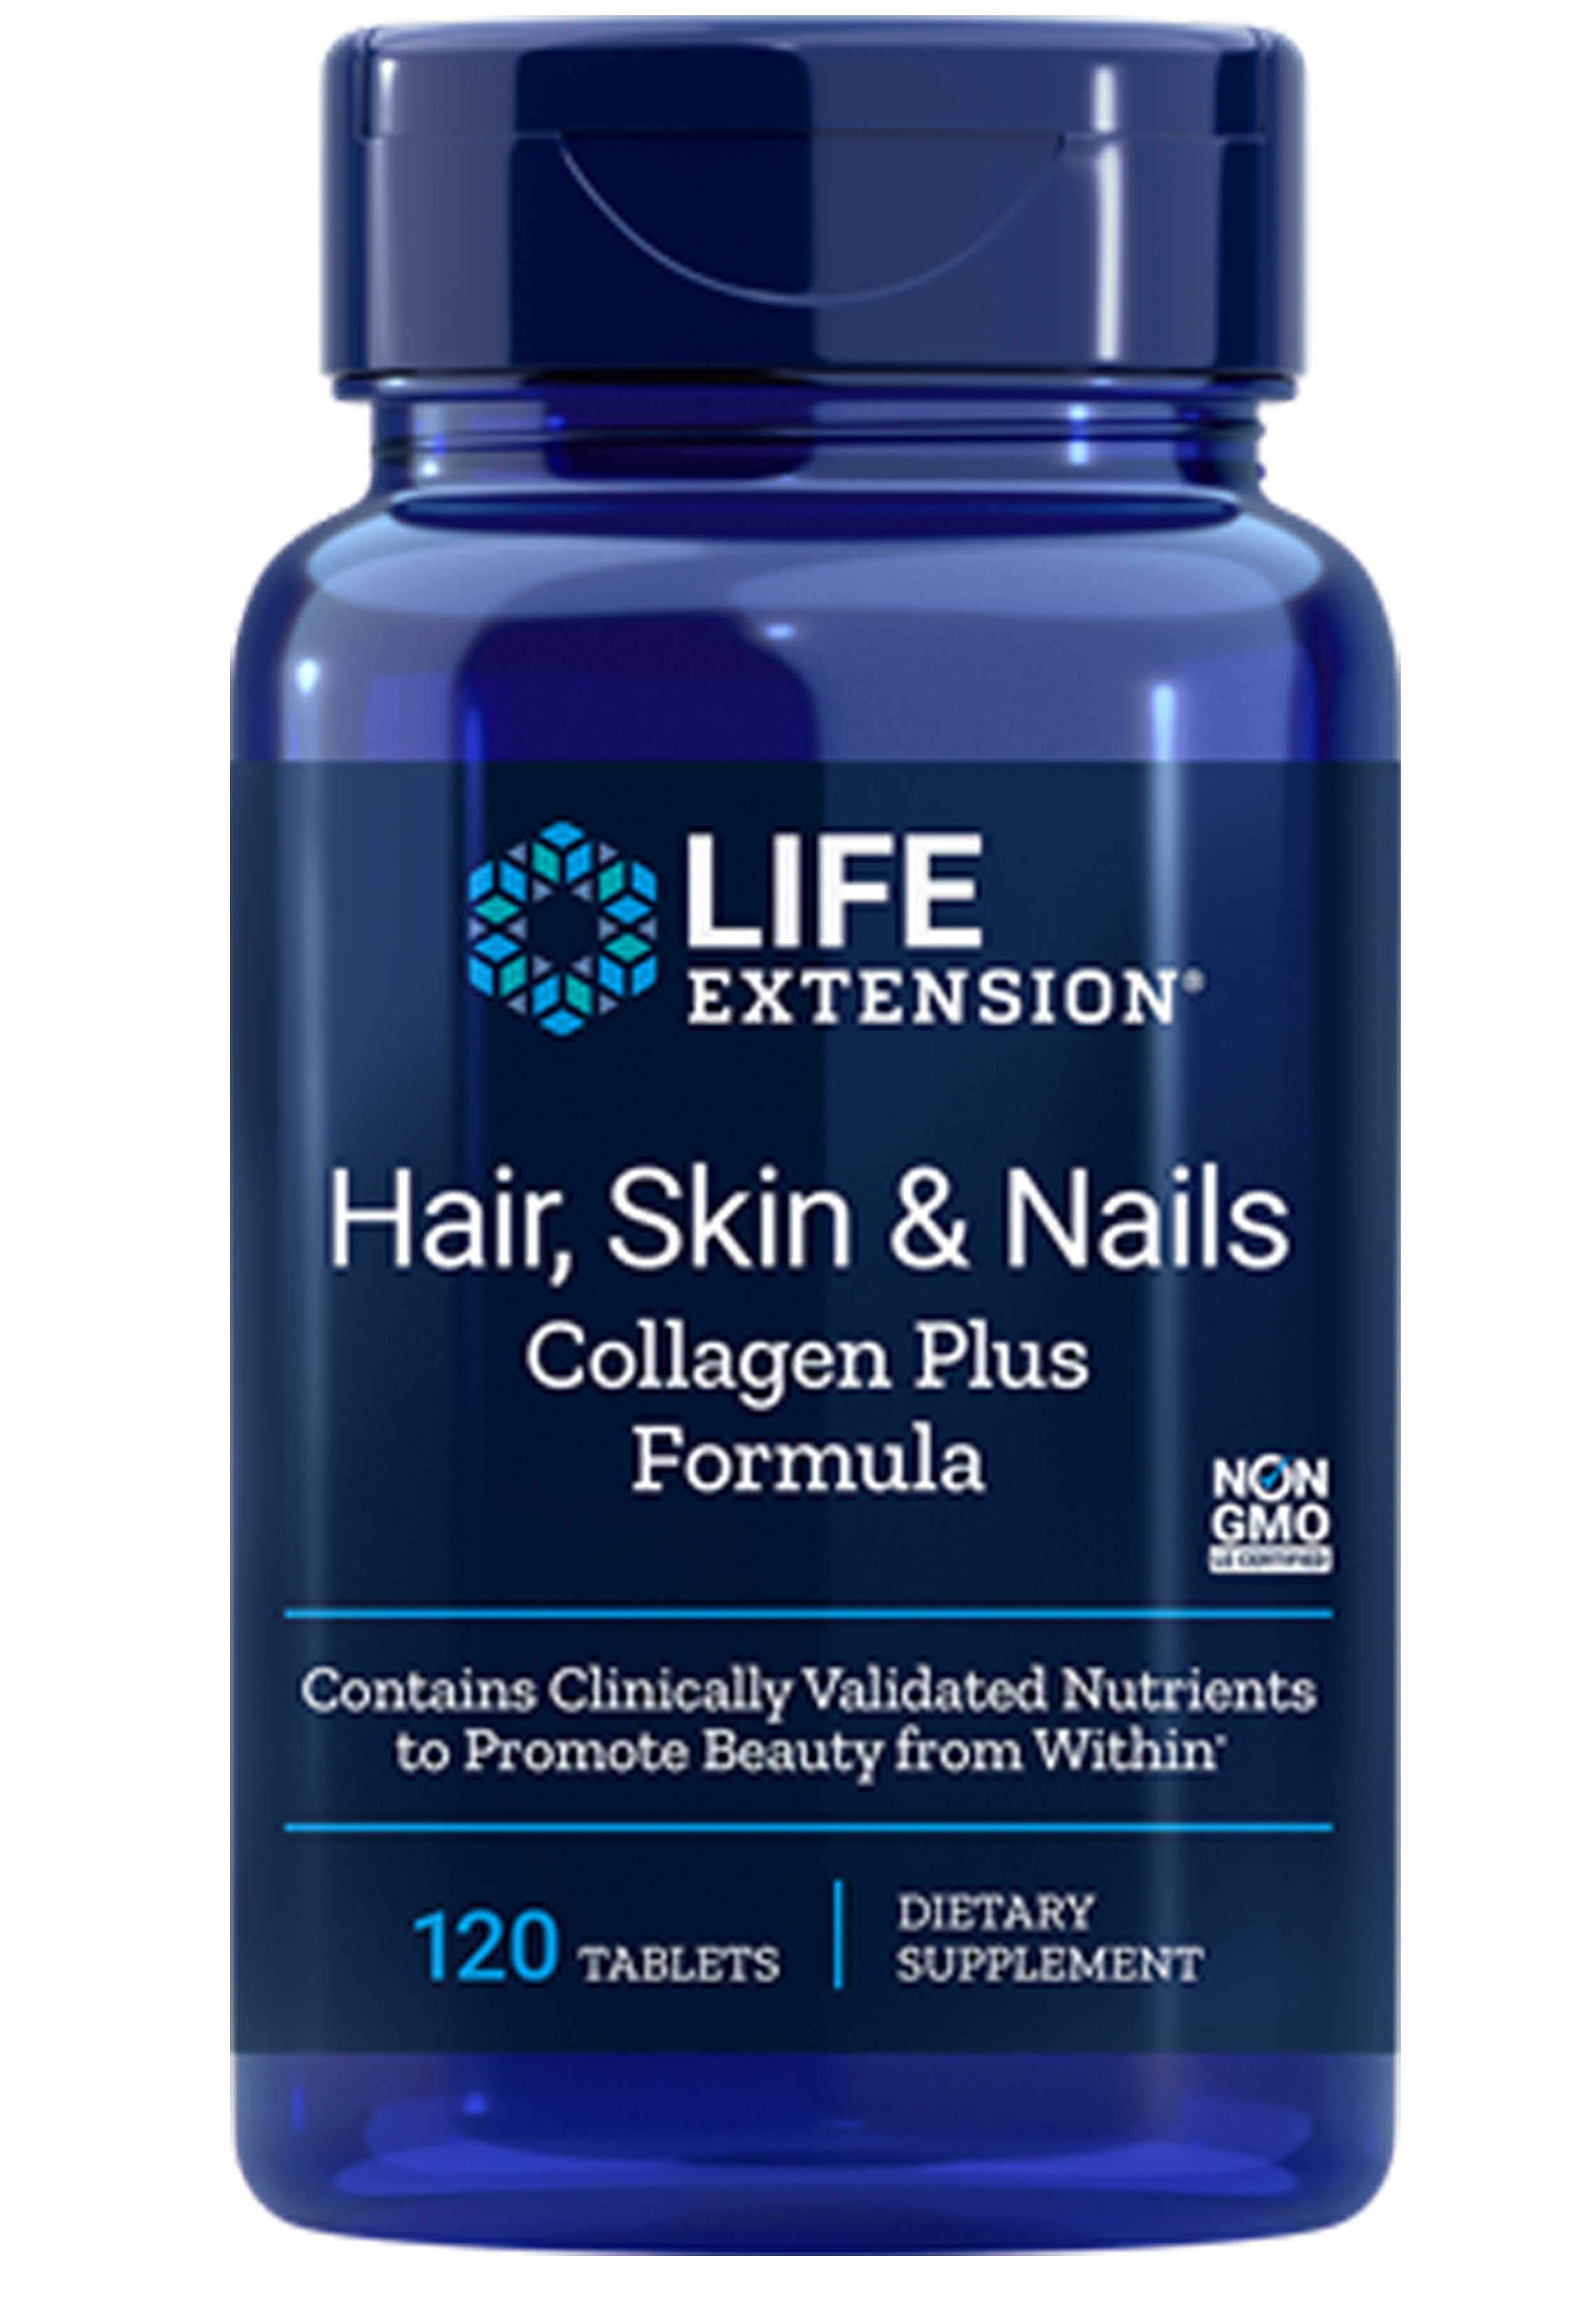 Life Extension Hair, Skin & Nails Rejuvenation Formula with VERISOL